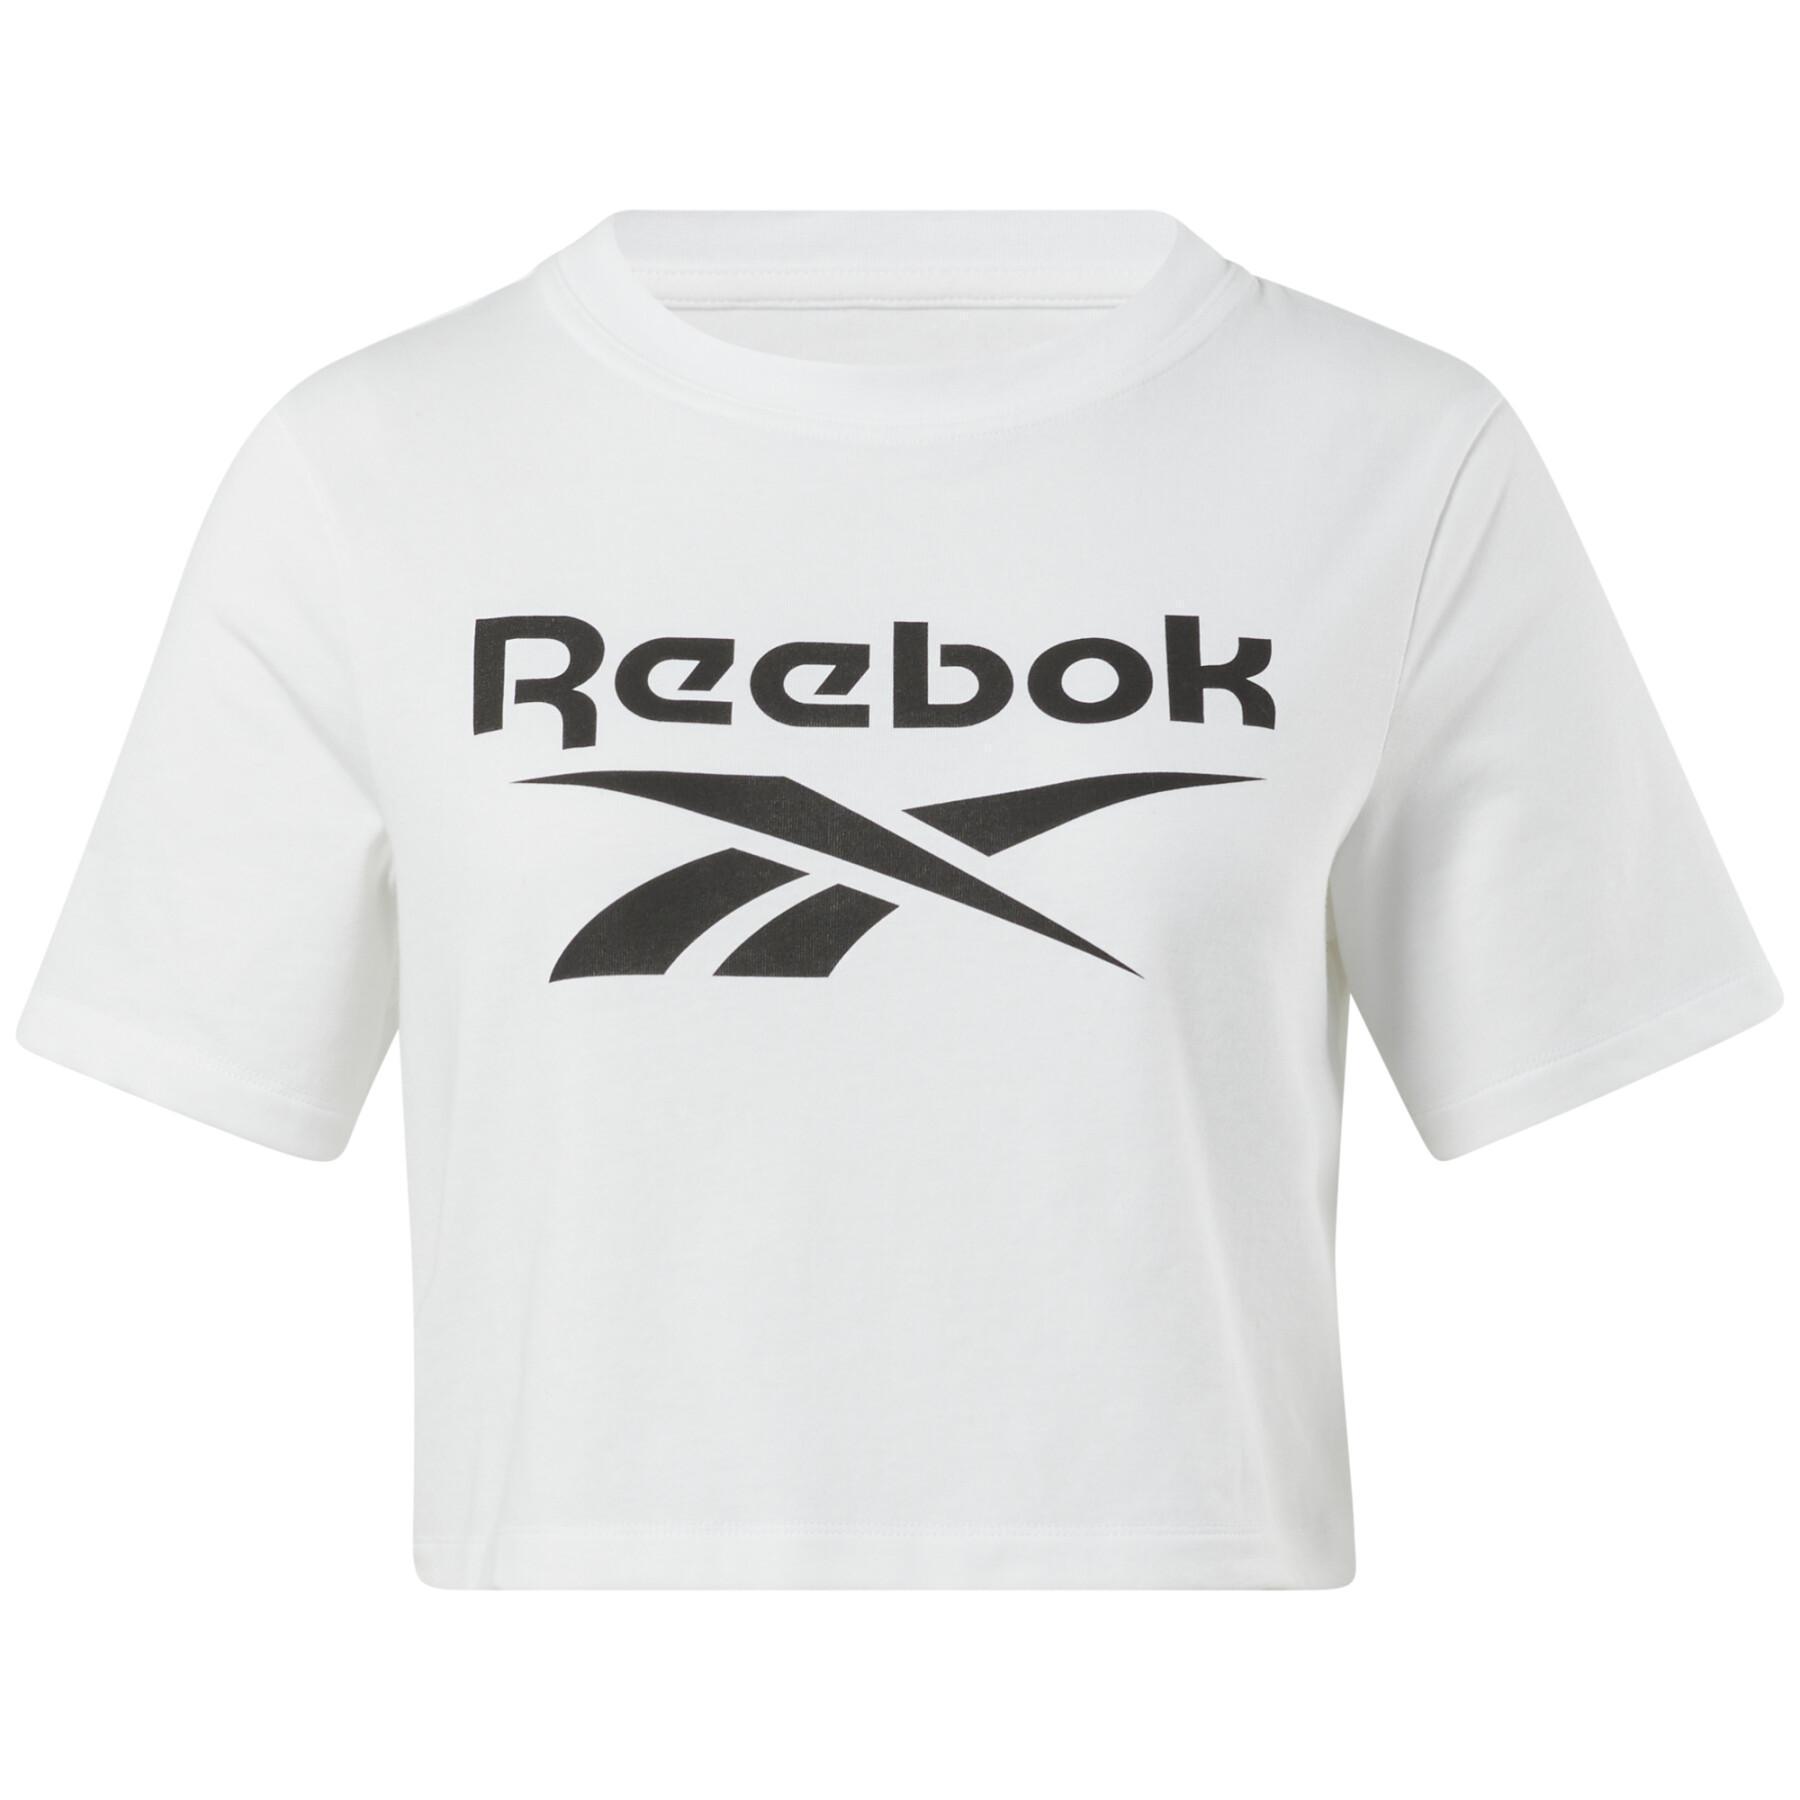 Camiseta de mujer Reebok Identity Bl